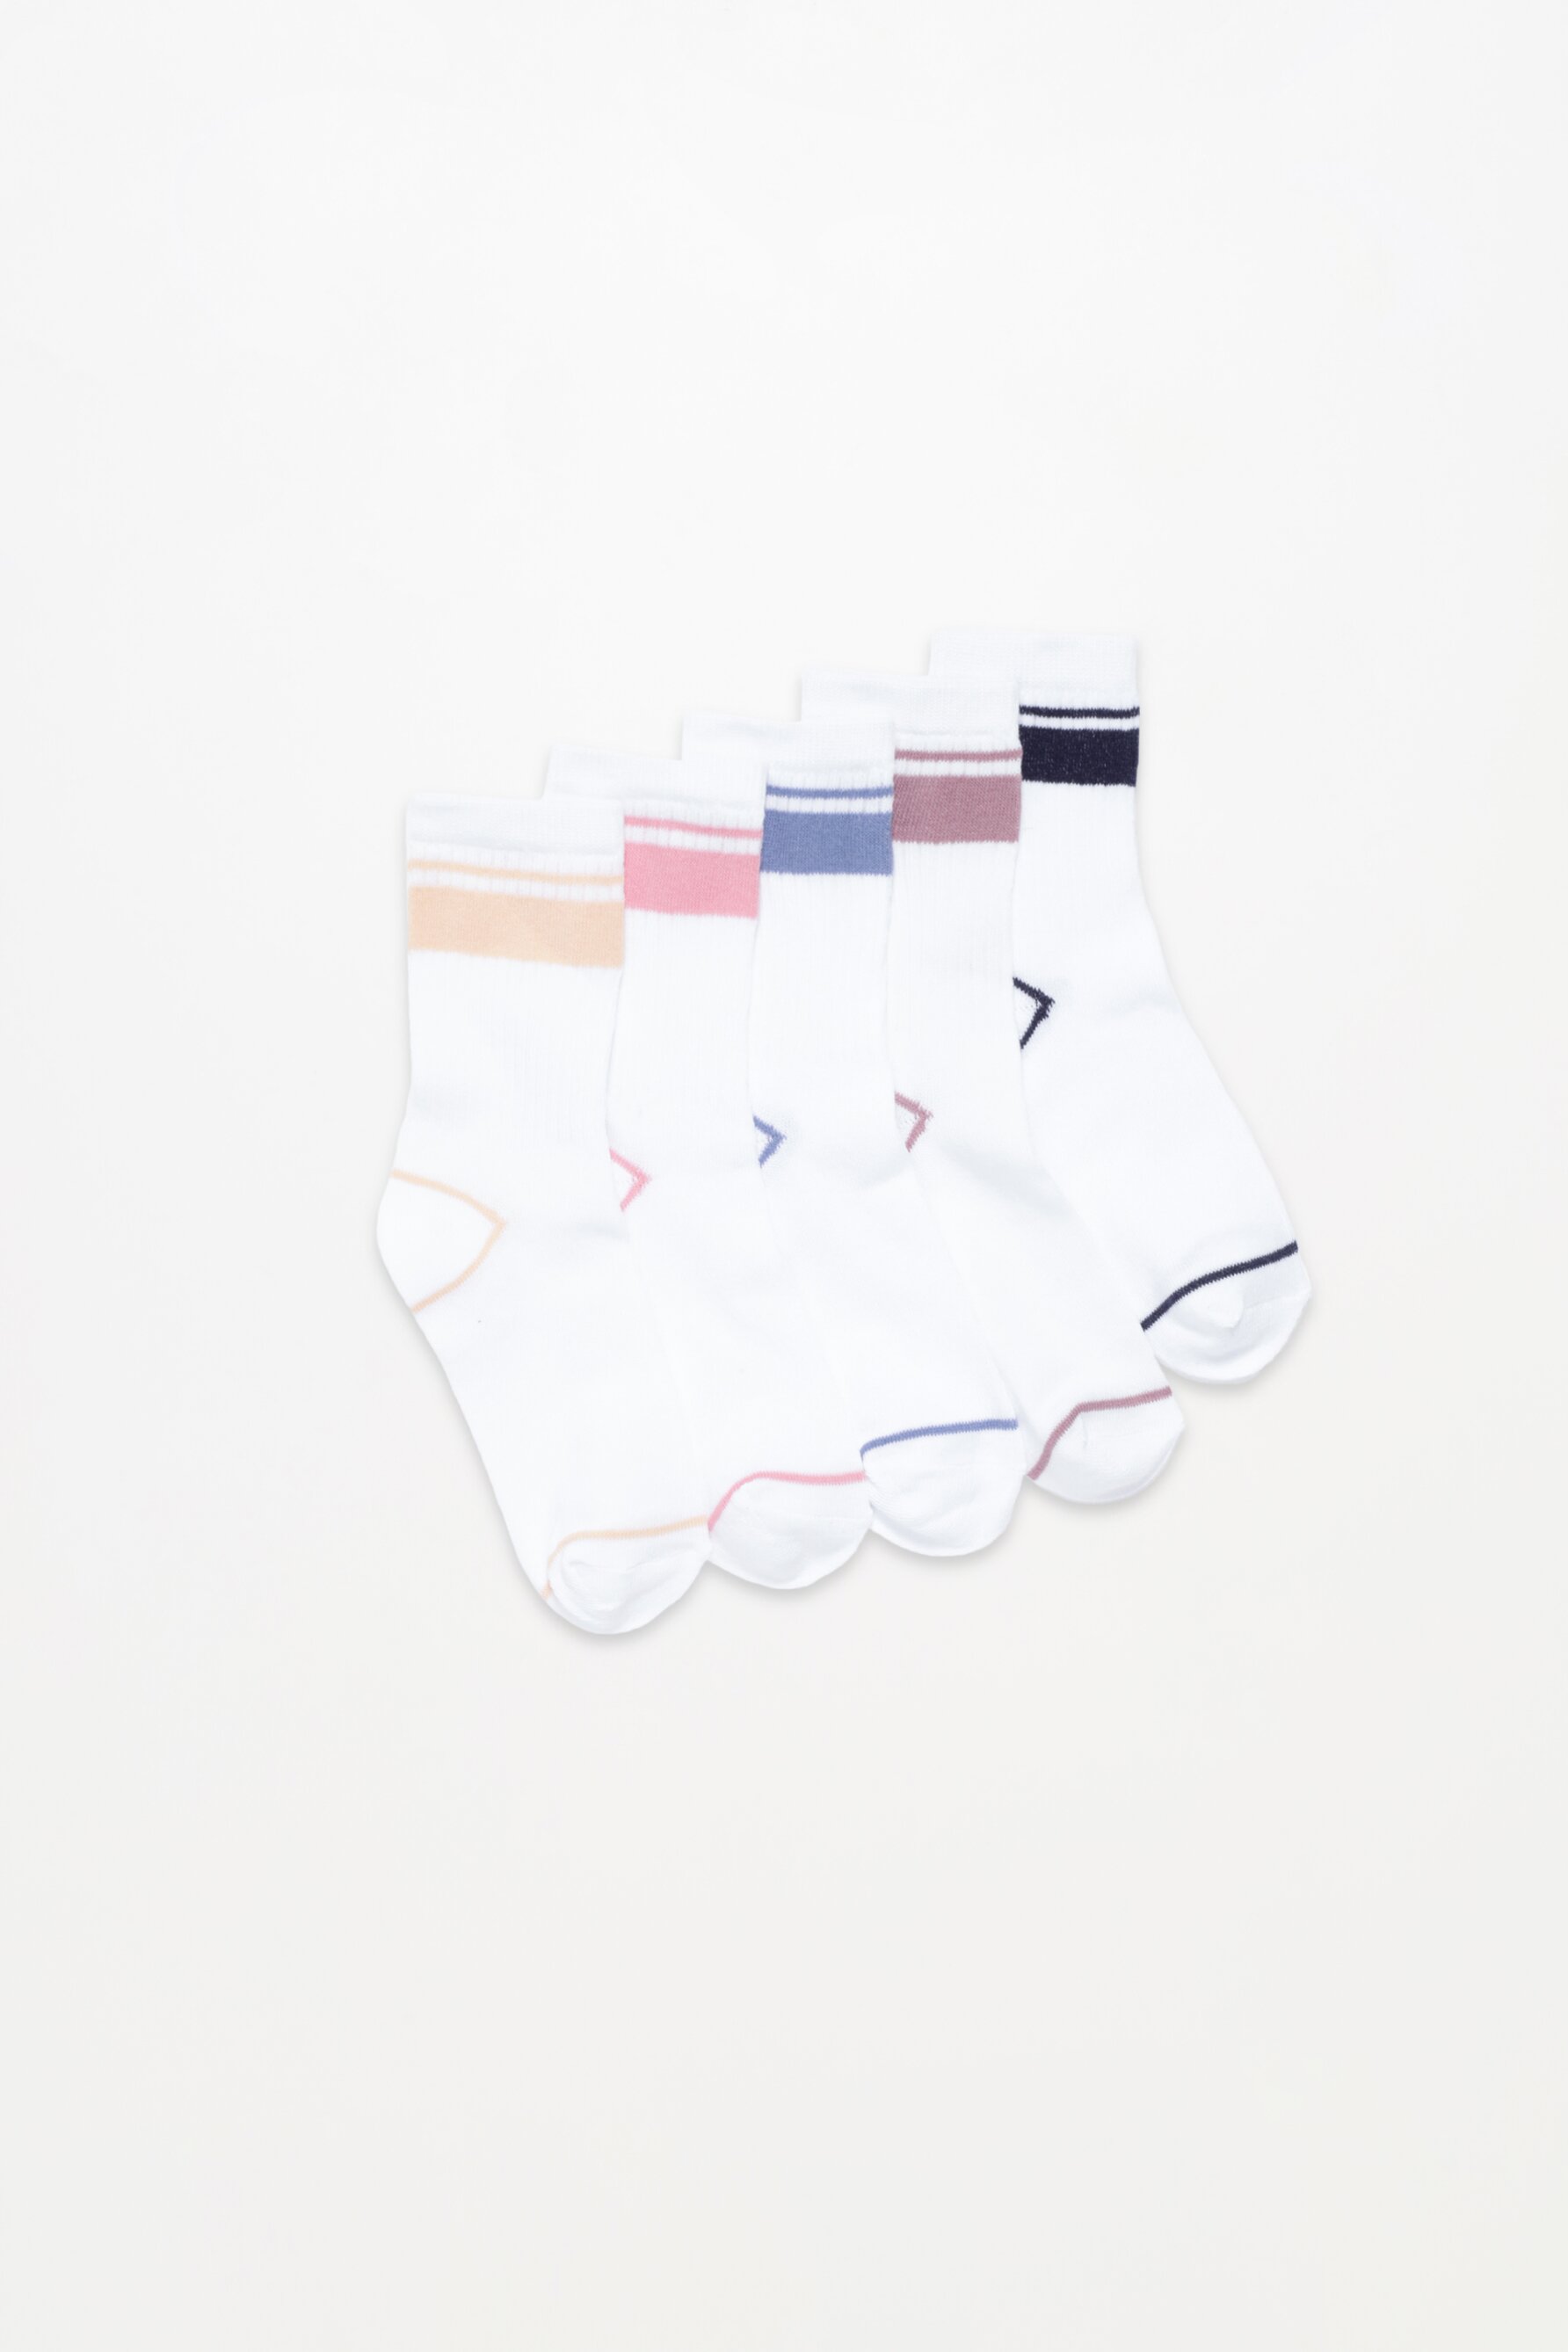 Socks, Underwear, & Accessories for Women